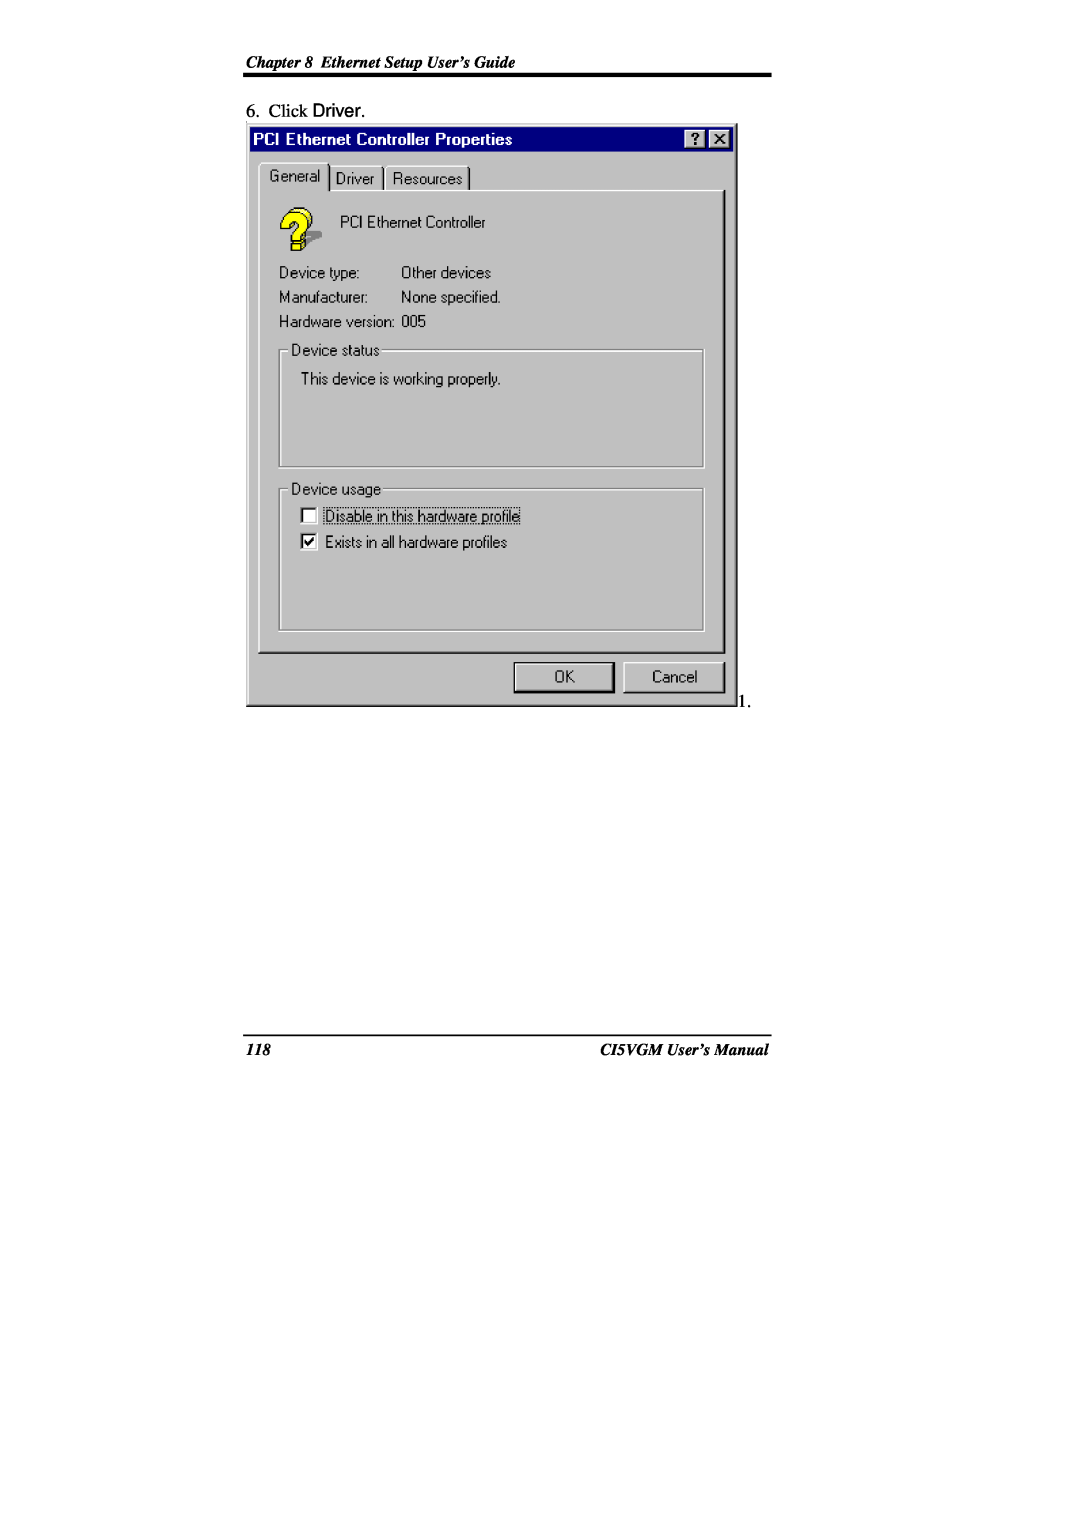 IBM CI5VGM Series user manual Click Driver, Ethernet Setup User’s Guide, CI5VGM User’s Manual 